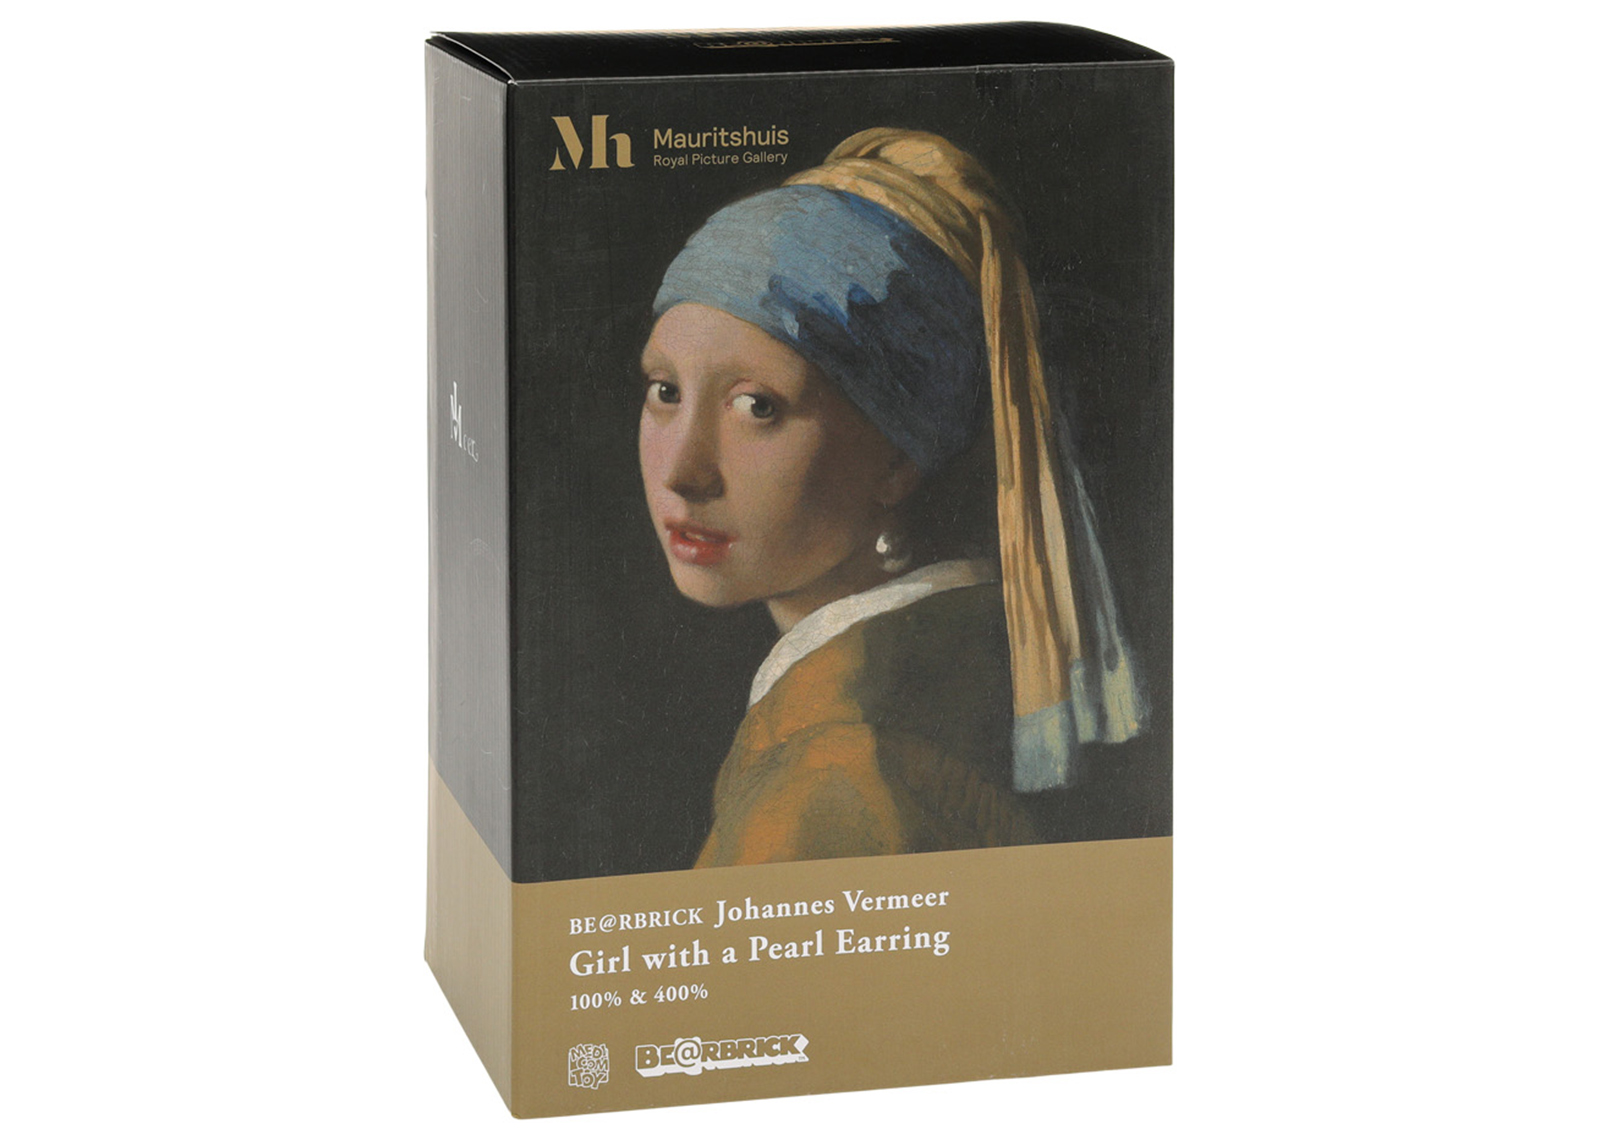 Bearbrick Johannes Vermeer (Girl with a Pearl Earring) 100% u0026 400% Set - US